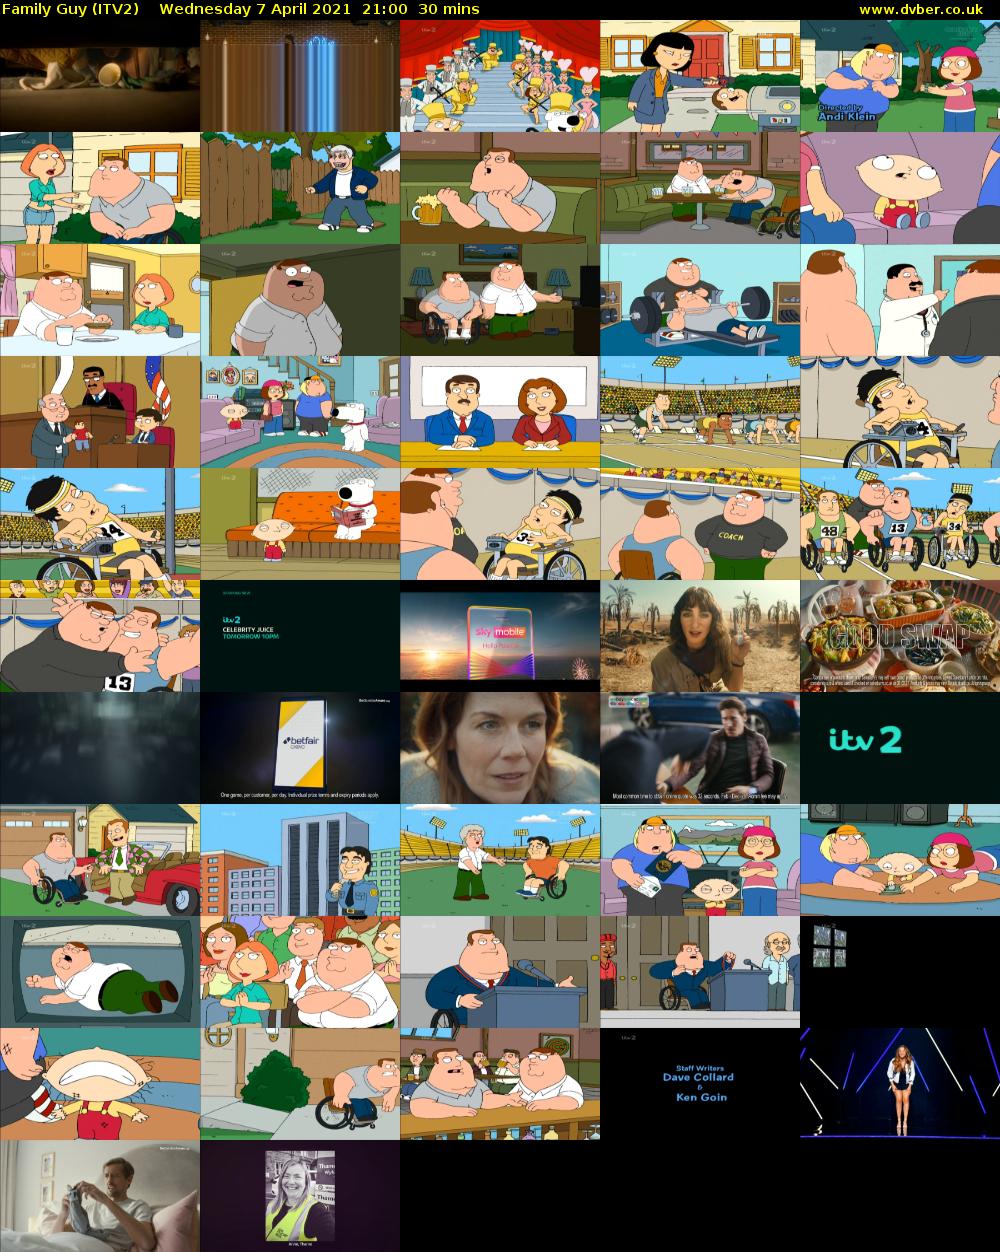 Family Guy (ITV2) Wednesday 7 April 2021 21:00 - 21:30